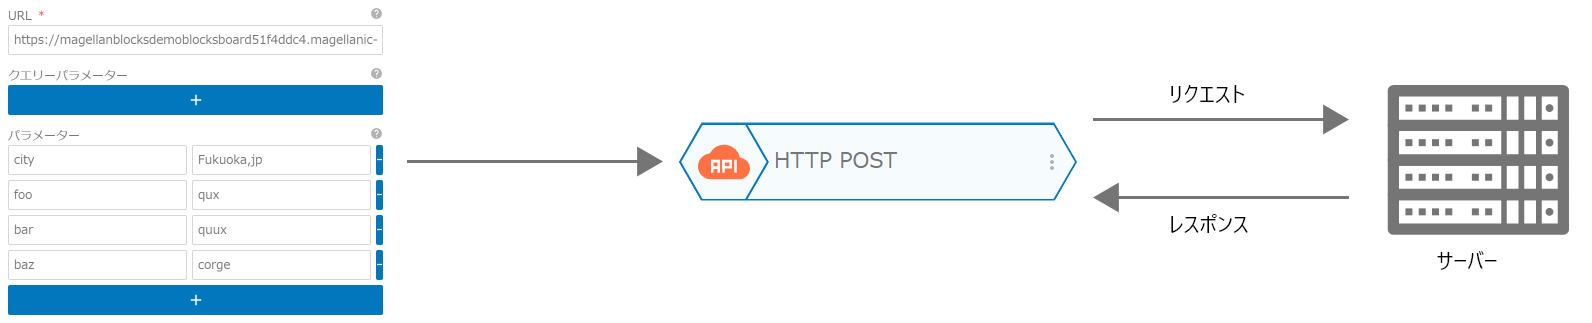 HTTP GET ブロックの概念図